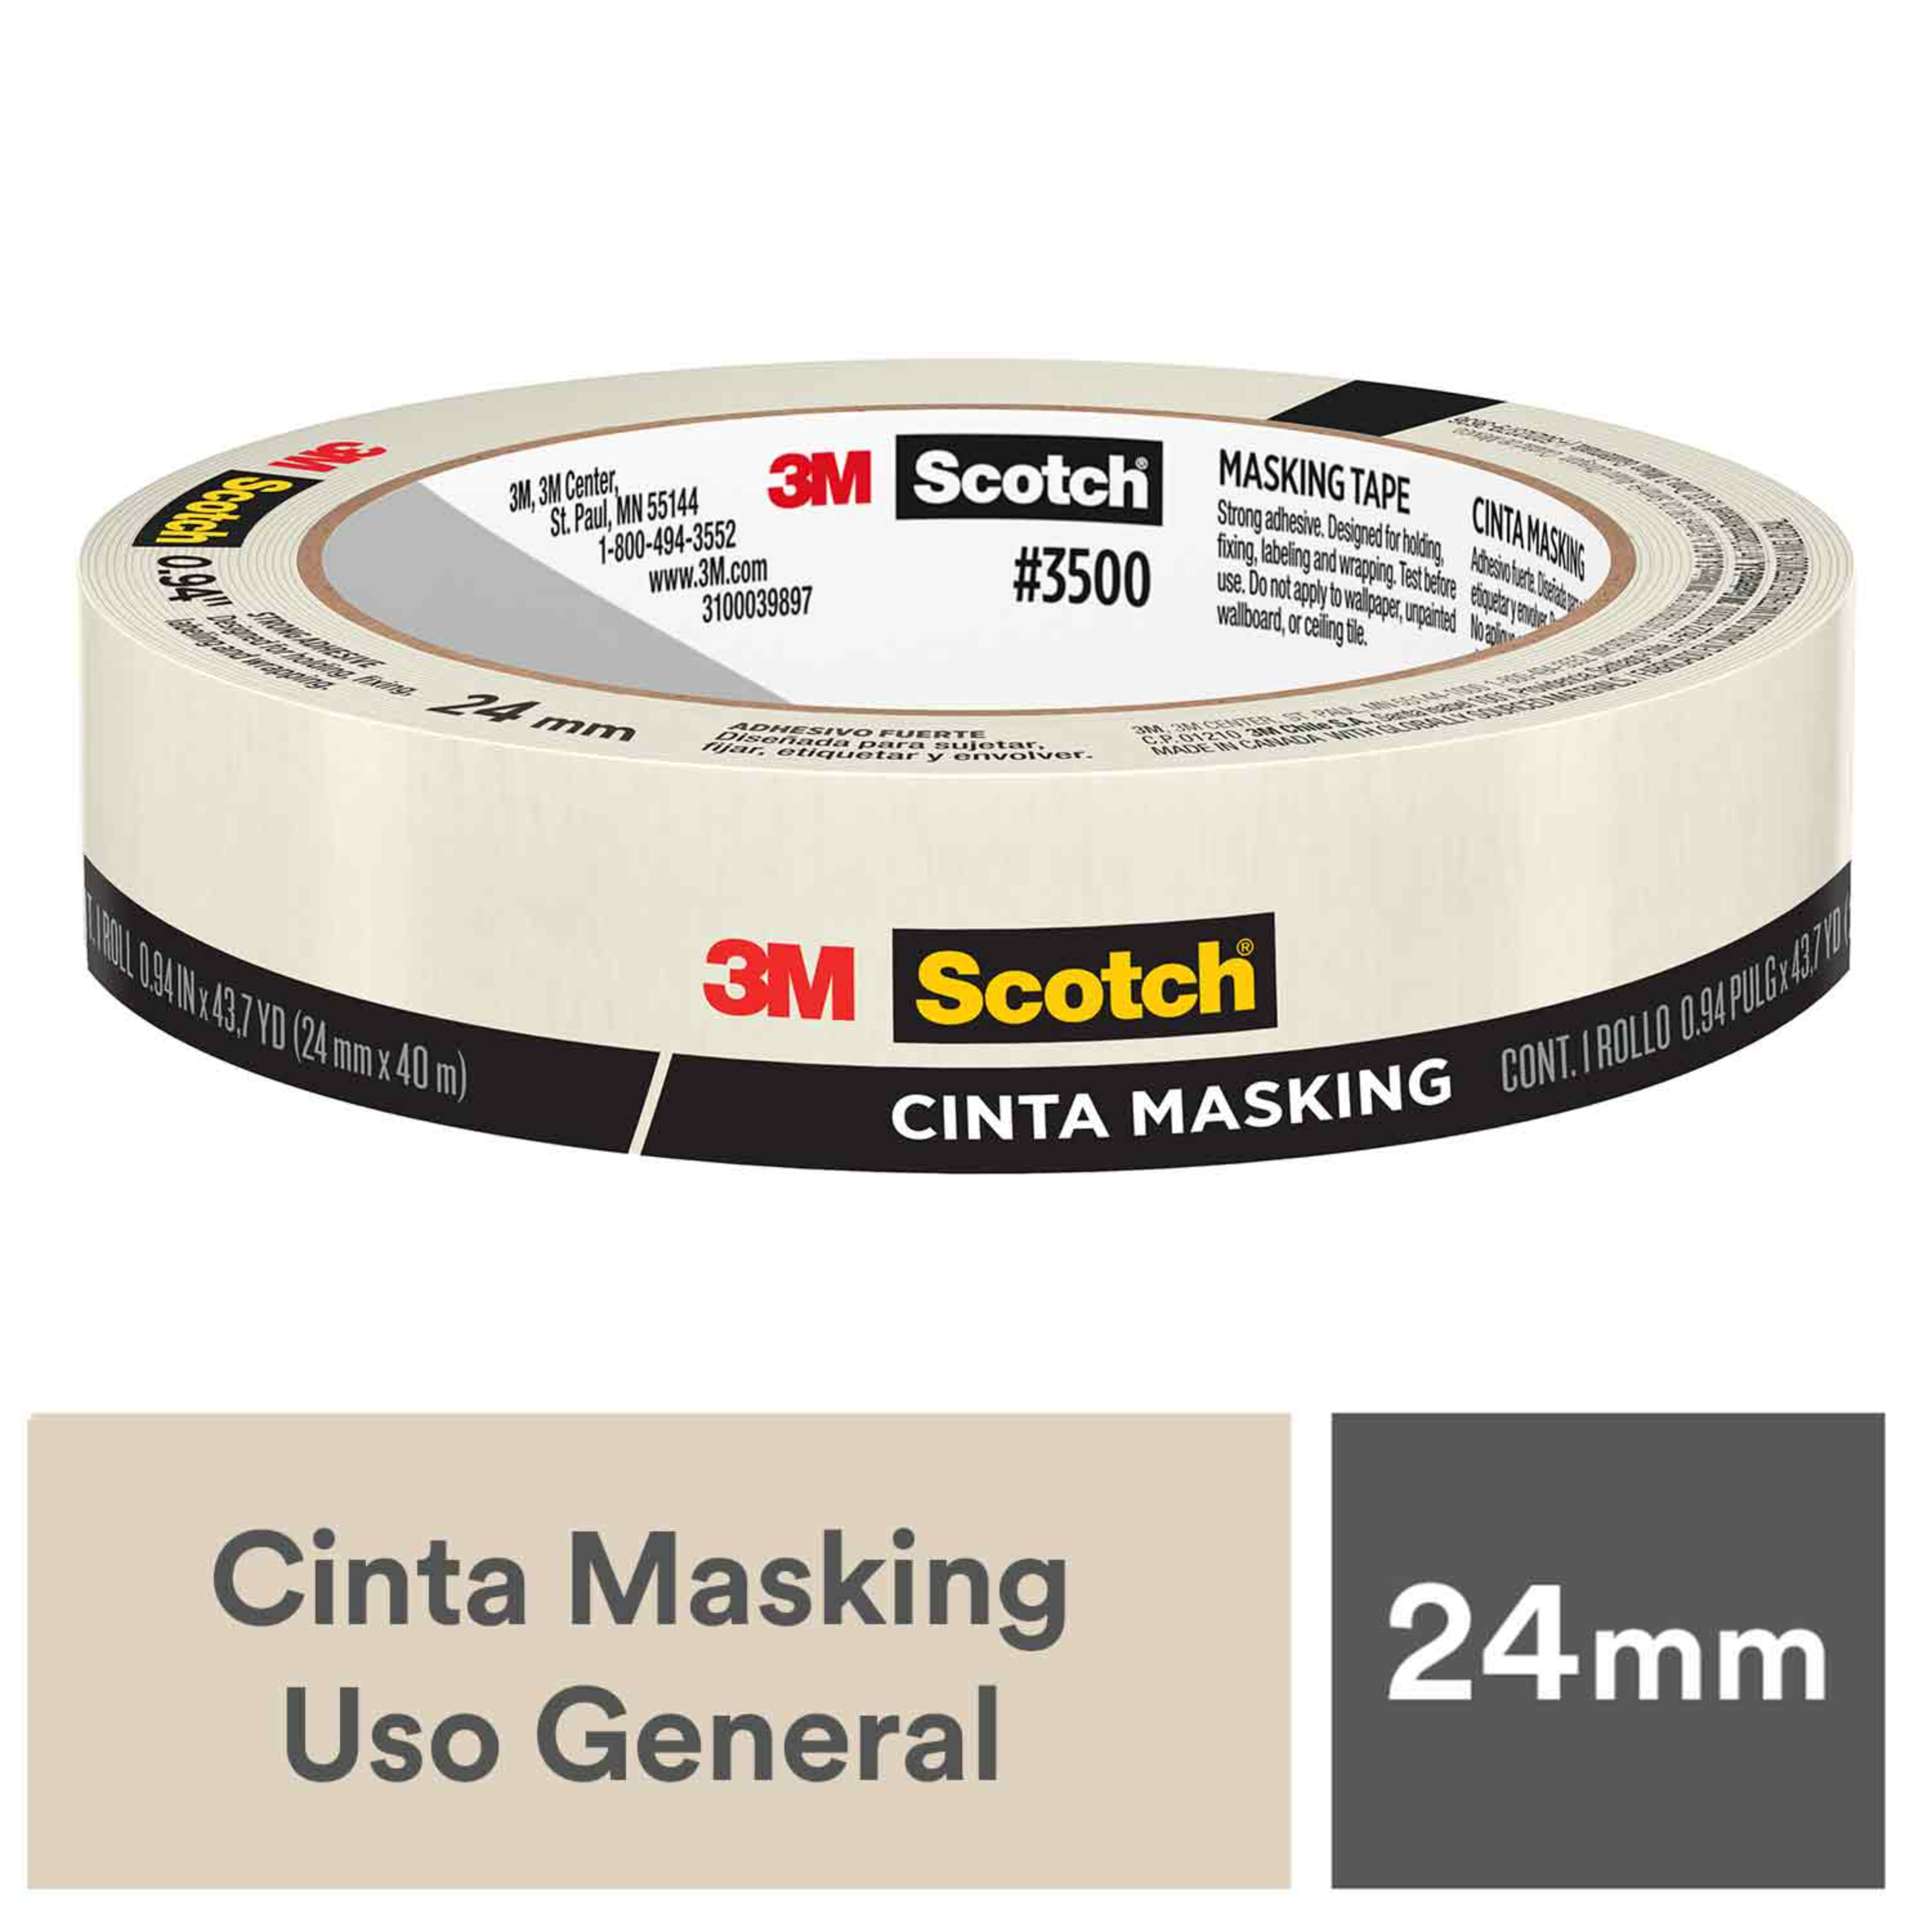 Comprar Scotch Masking Tape 18 mm x 40 m, Walmart Costa Rica - Maxi Palí